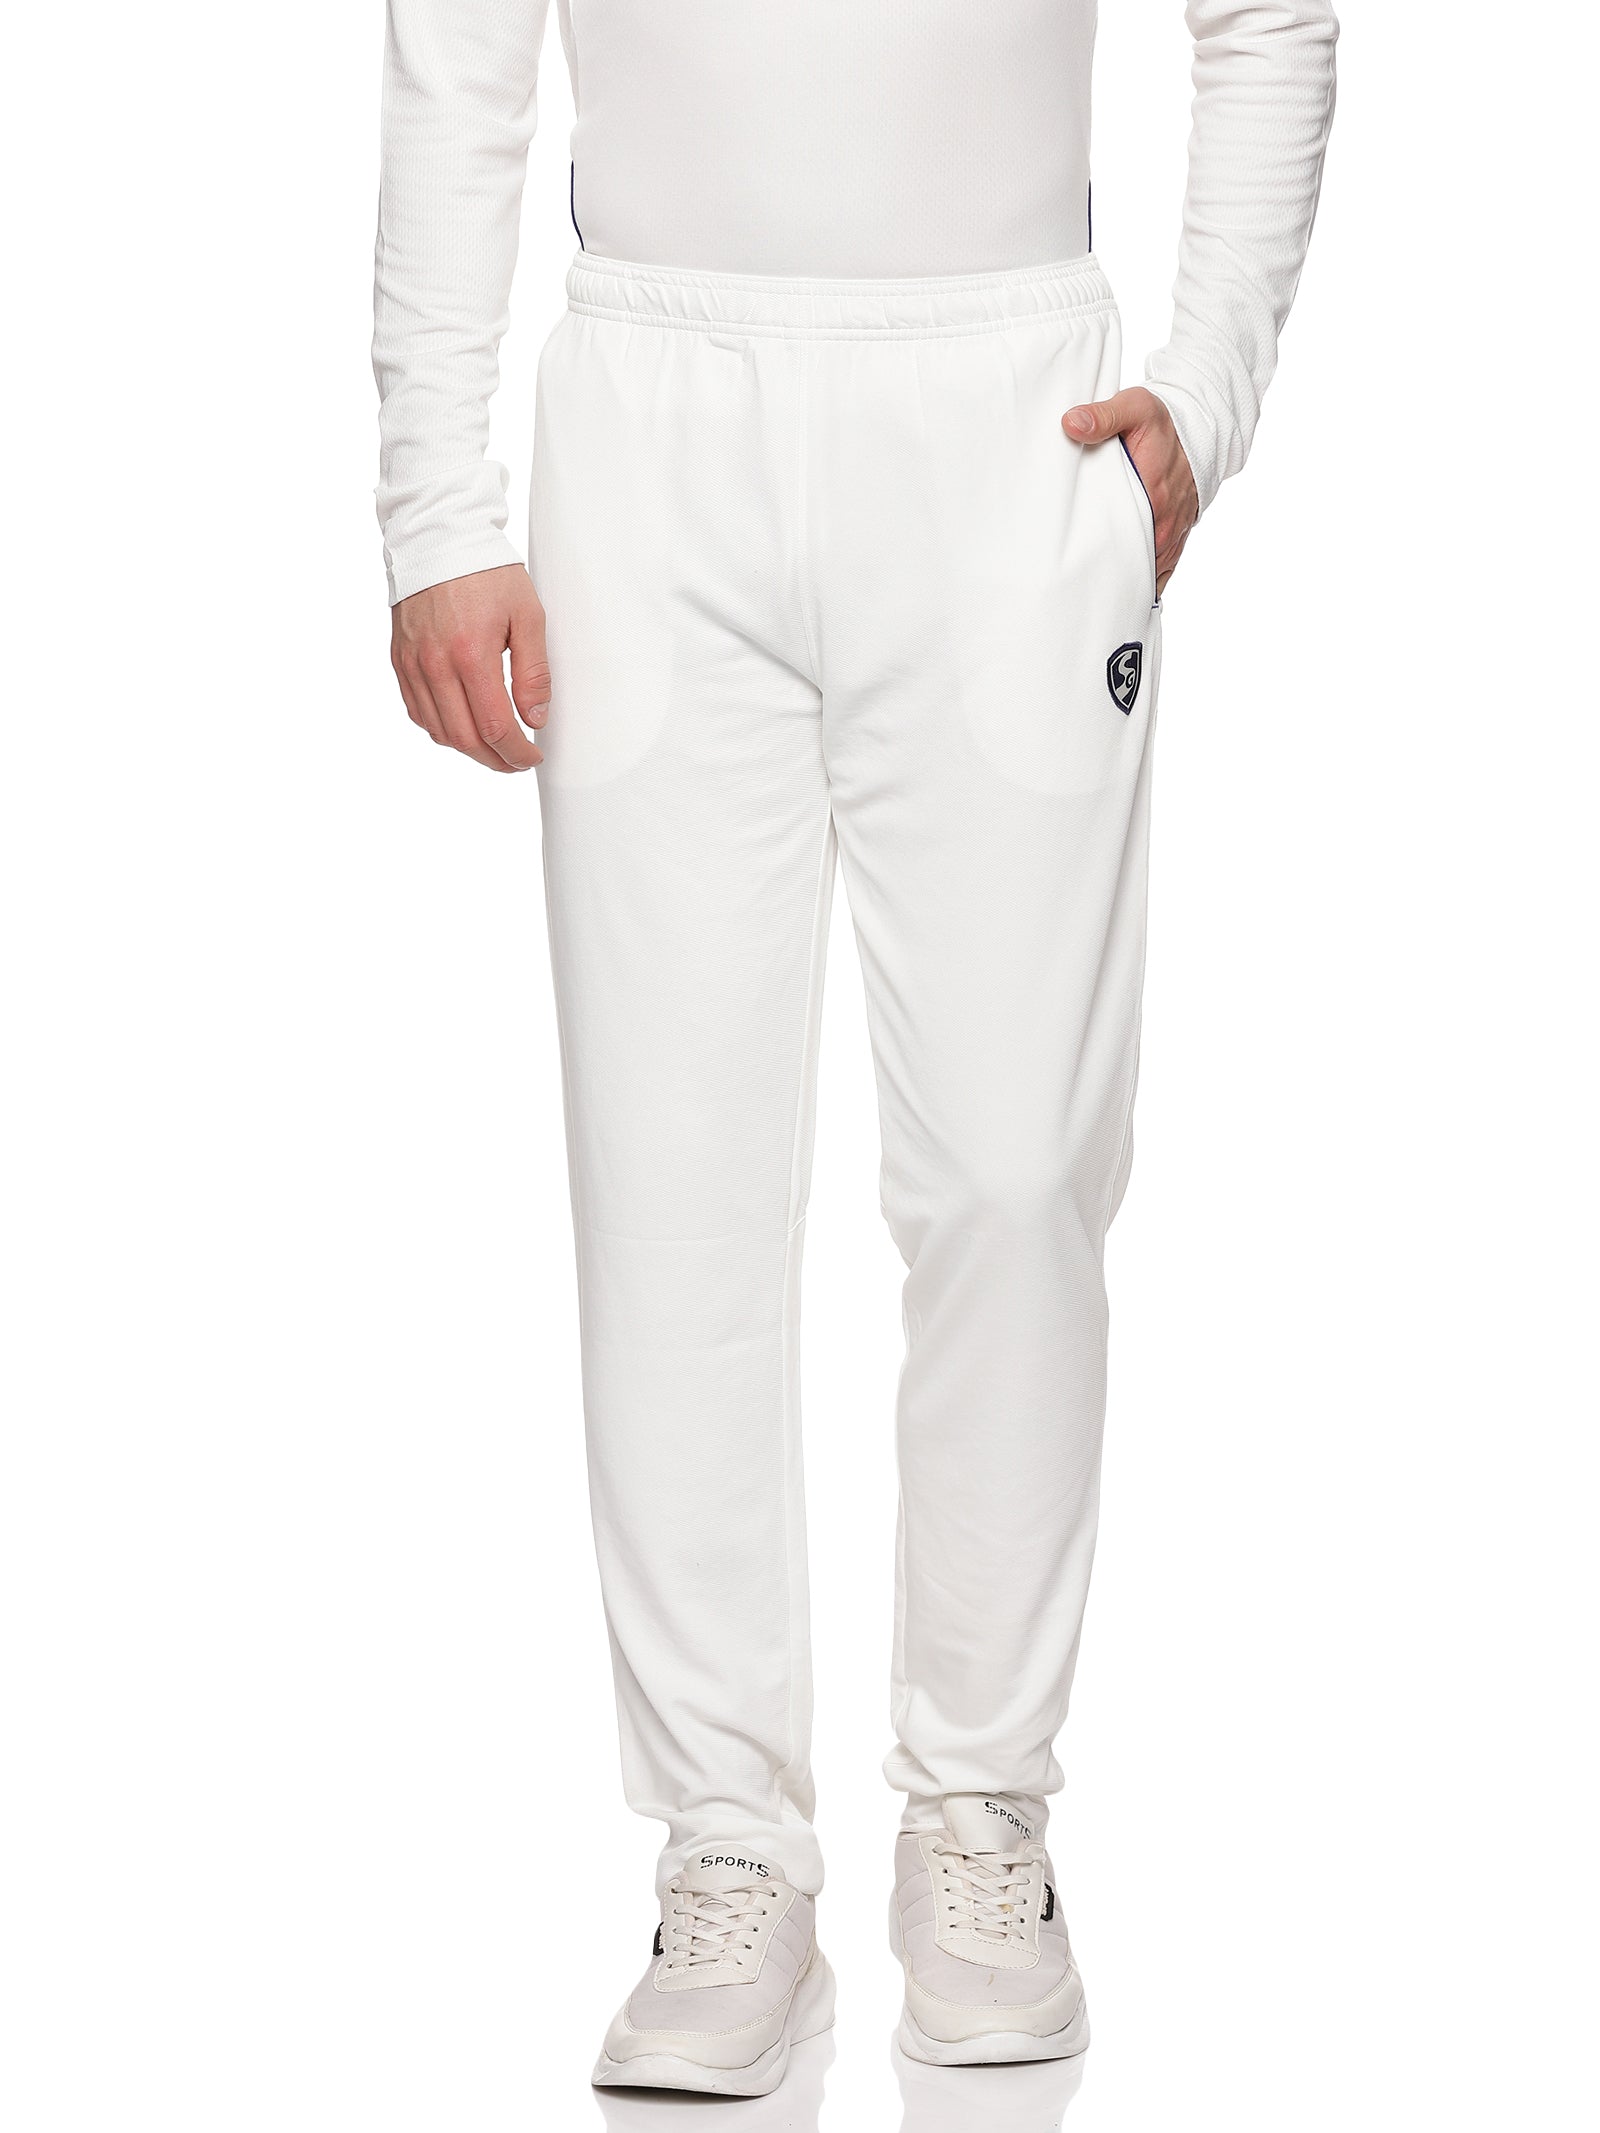 SG Test Cricket Trouser White - Best Price online Prokicksports.com